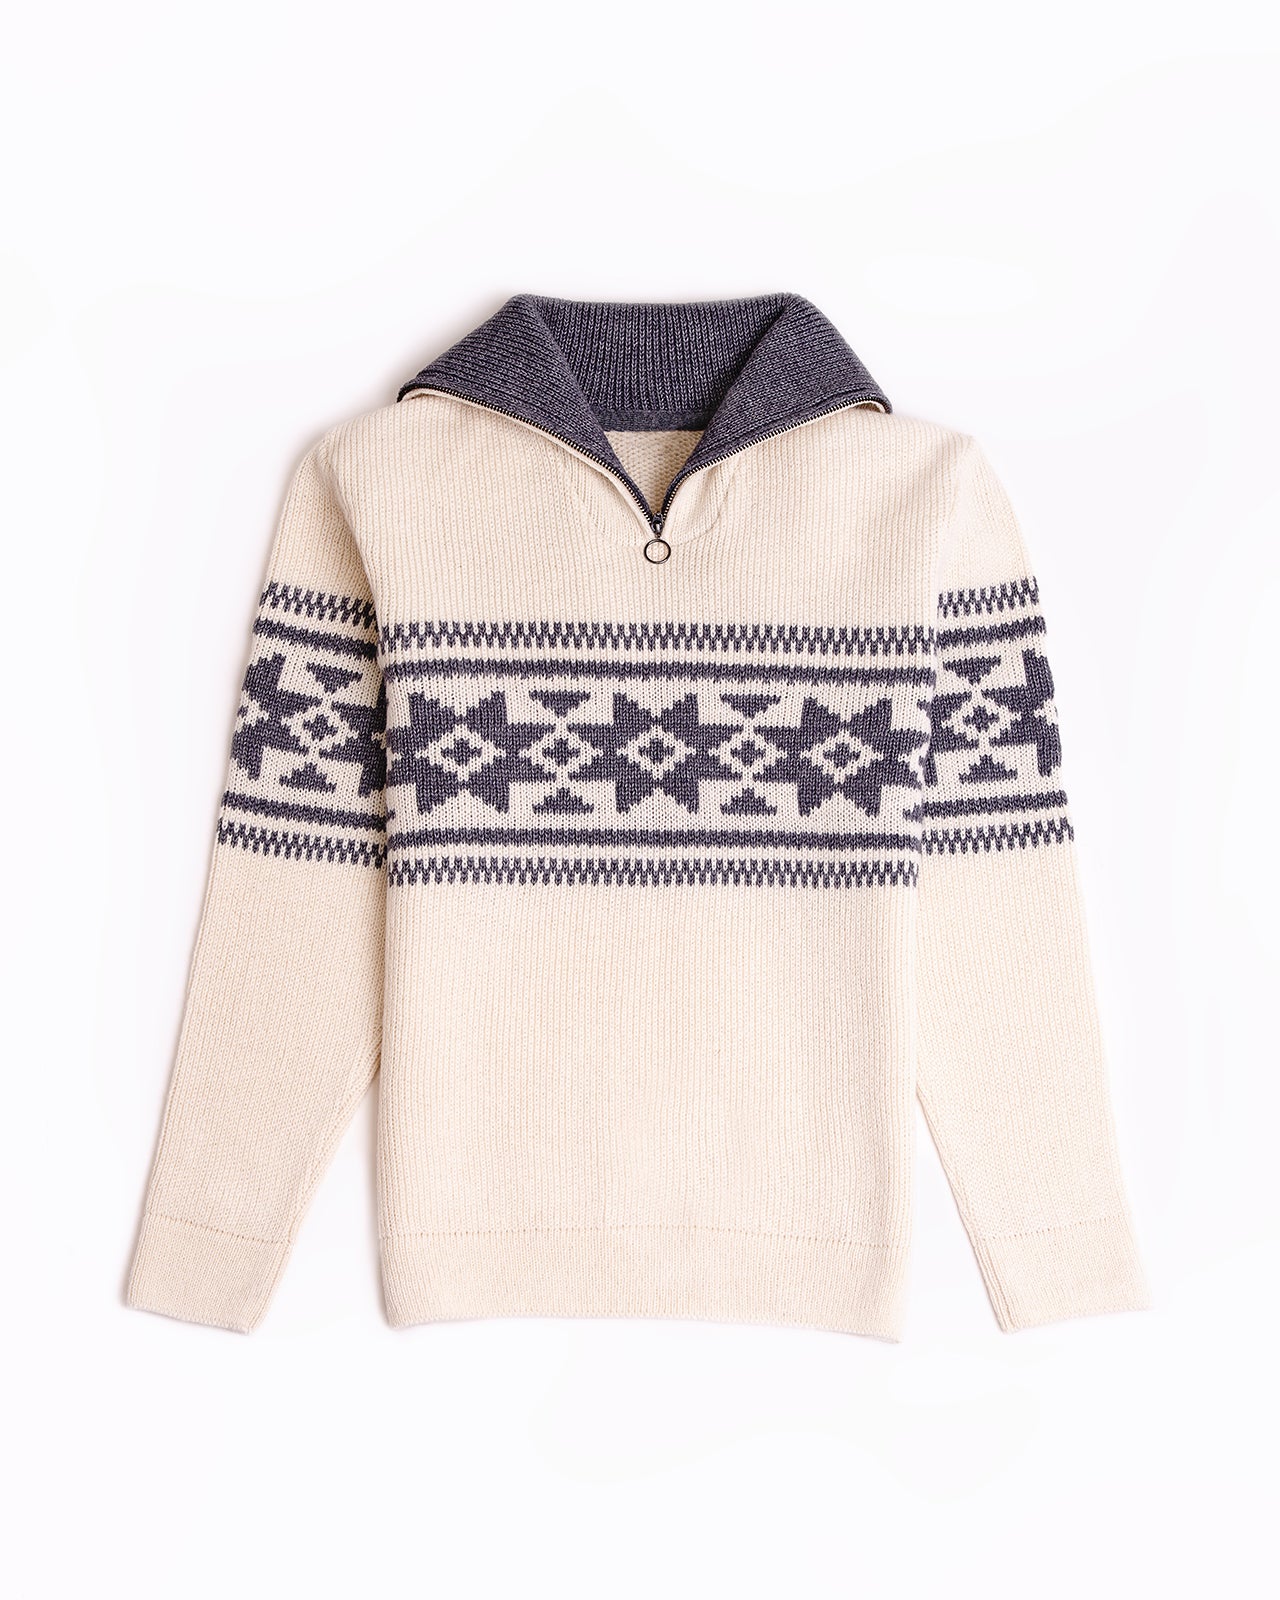 men's wool sweater milky white